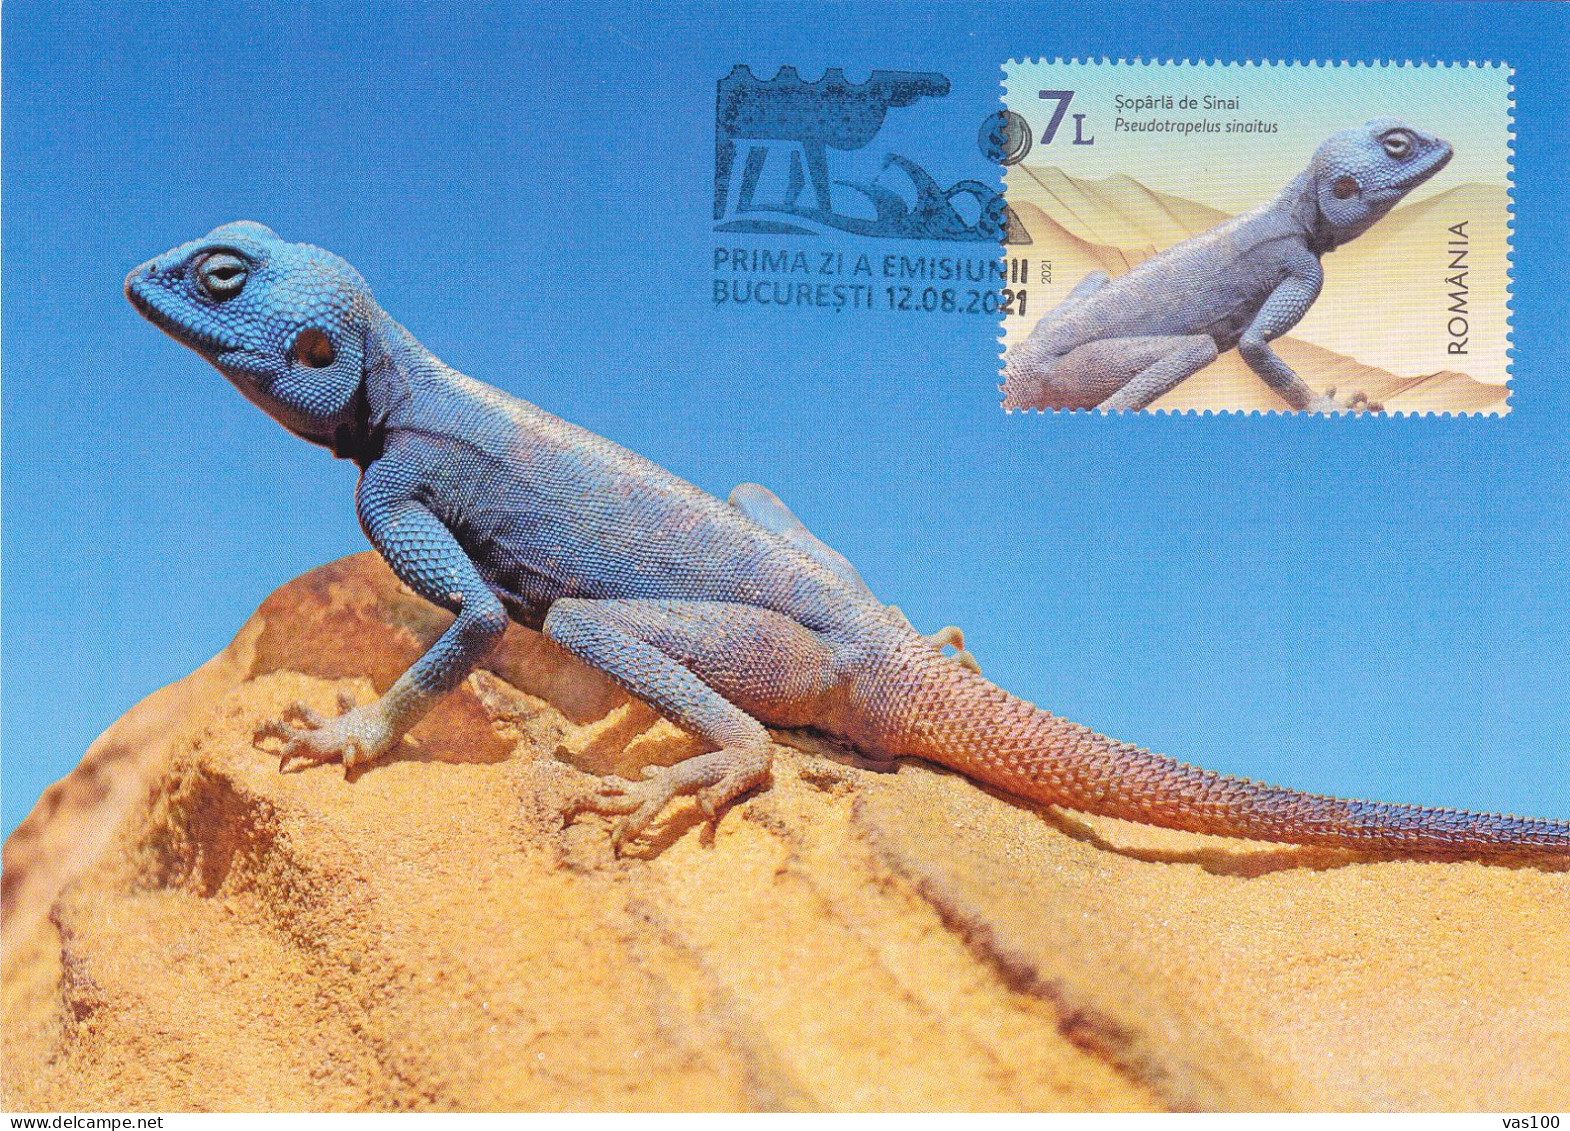 Reptiles / Crawler / Lizard /  MAXI CRD,CARTES MAXIMUM CM,2021 ROMANIA. - Maximum Cards & Covers